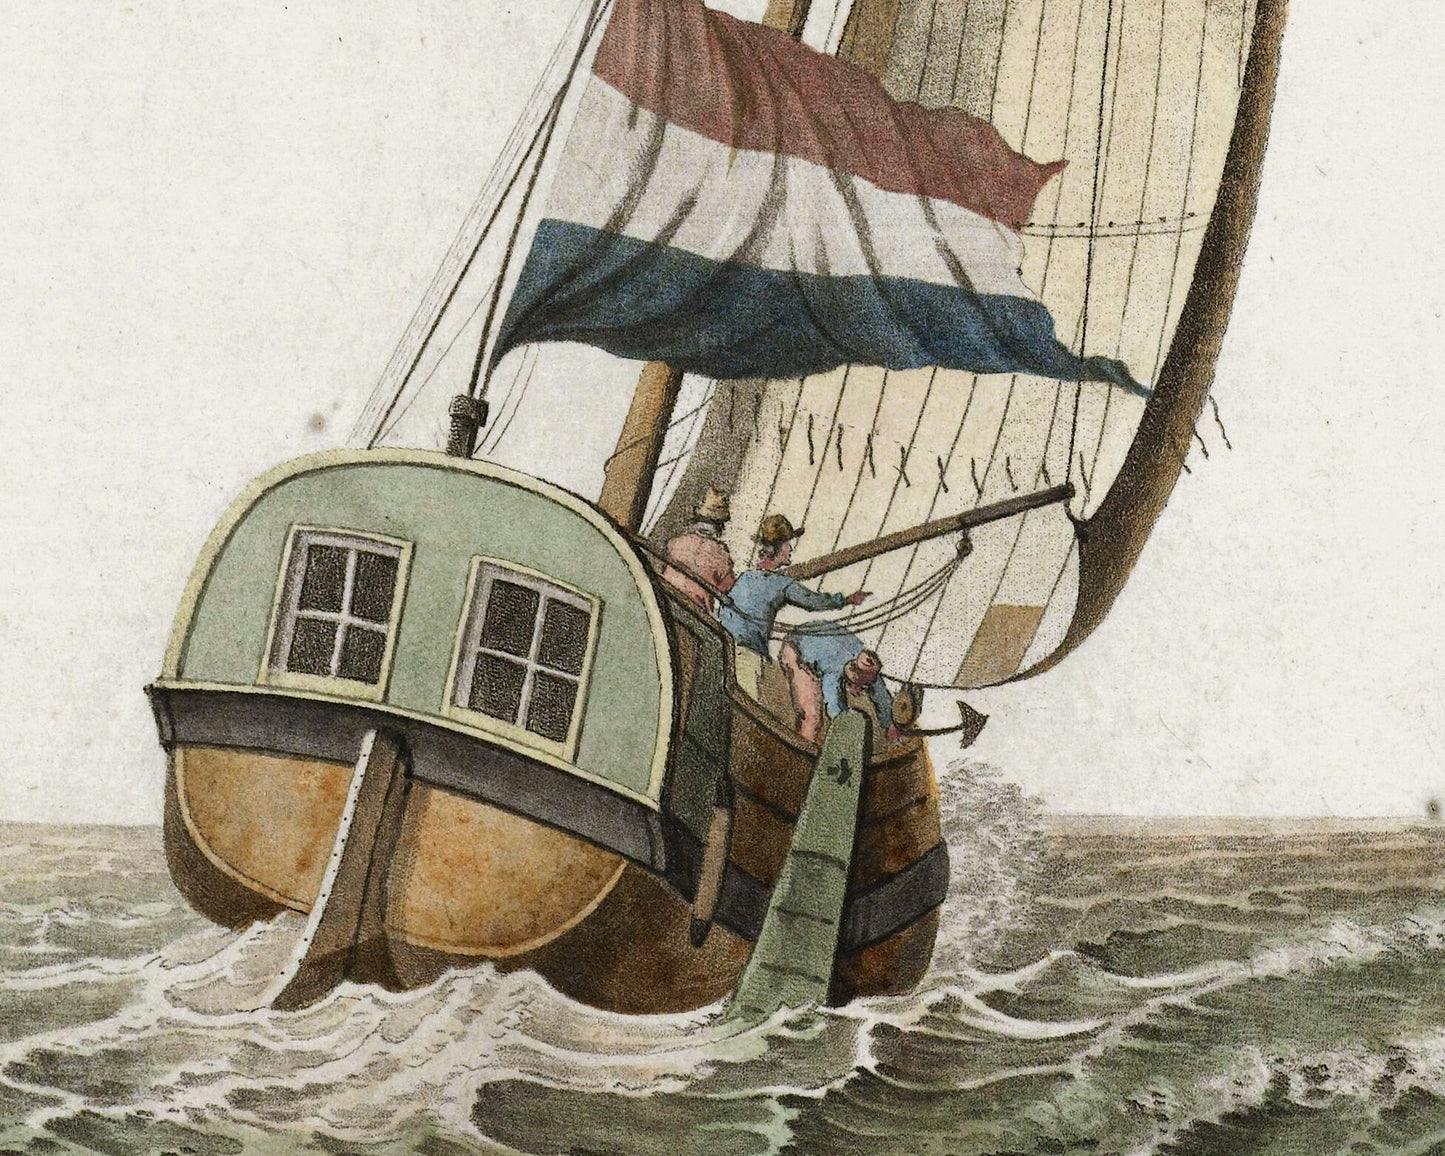 Antique Dutch sailing ship | Vintage sailboat on sea | Nautical wall art | Giclée fine art print | Modern vintage decor | Eco-Friendly gift